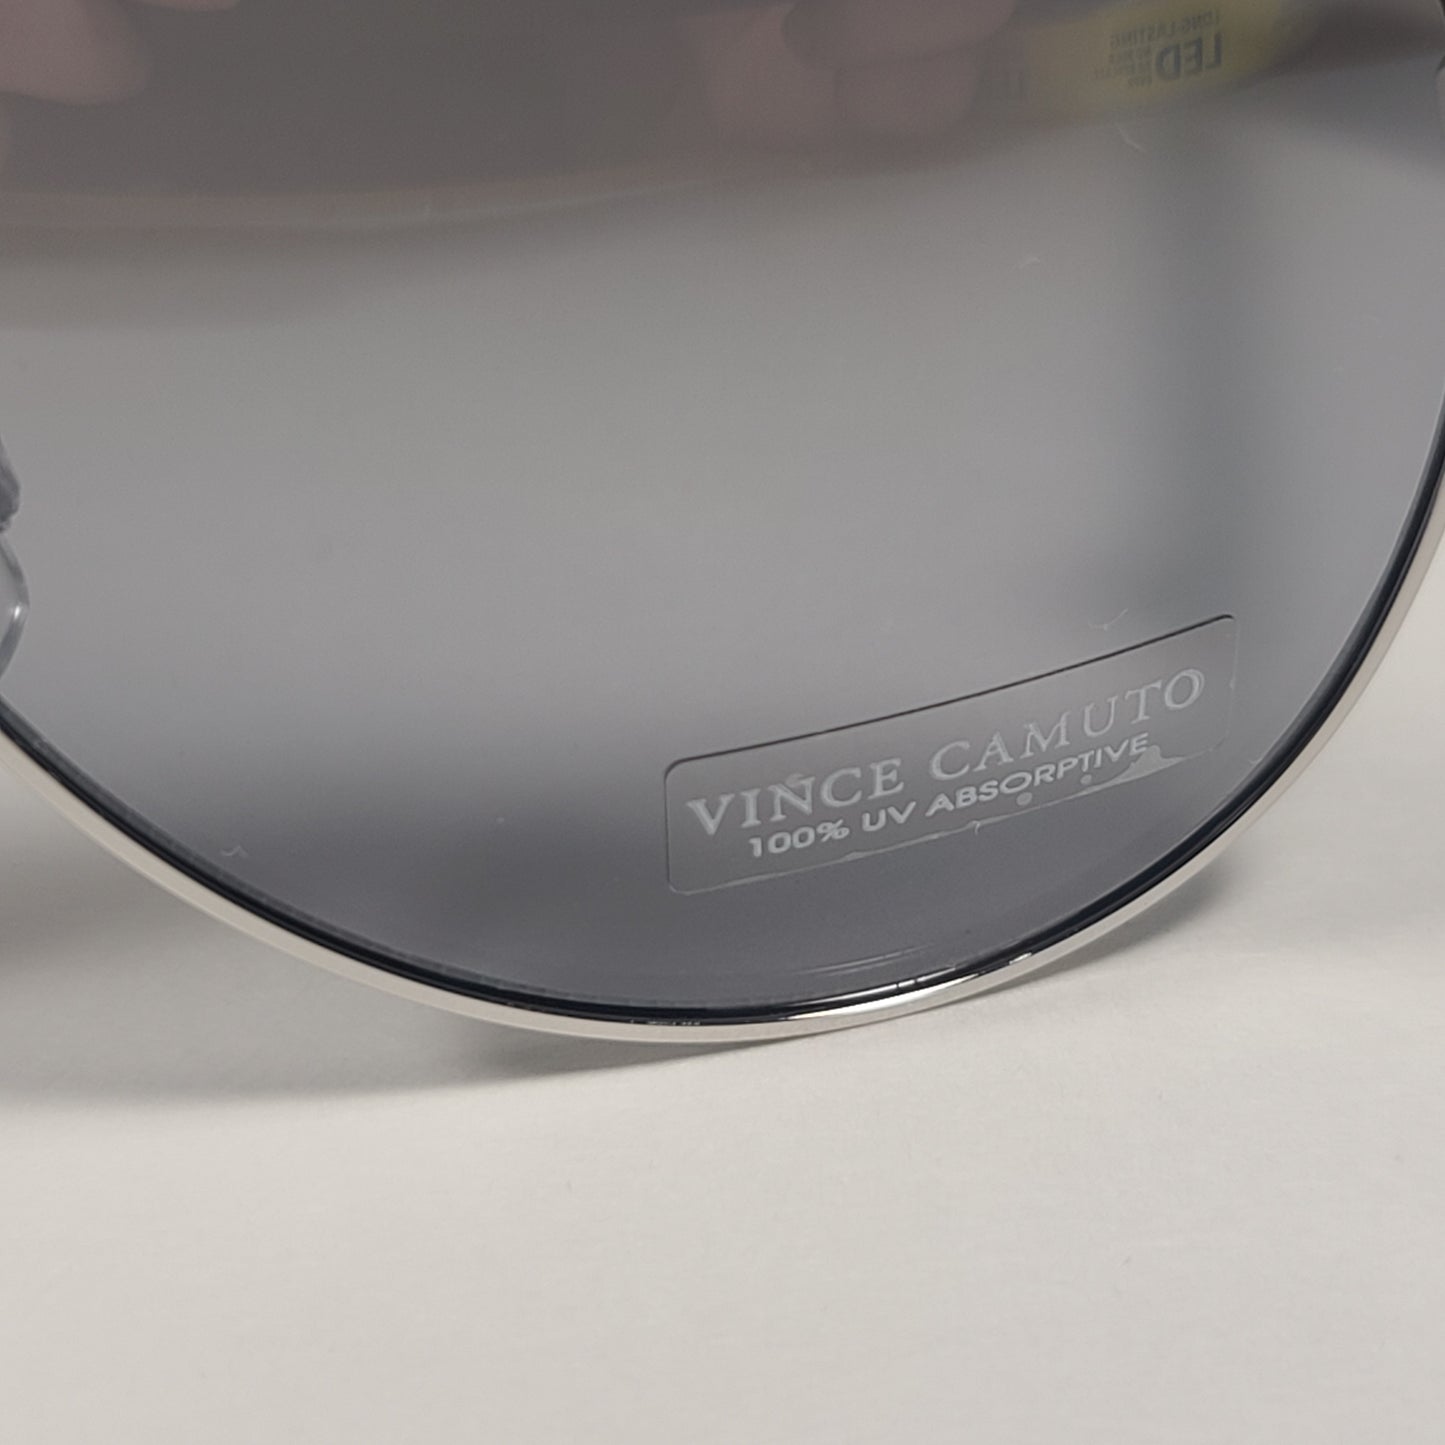 Vince Camuto VC593 SLVOX Aviator Sunglasses Silver Black Frame Silver Mirror Lens - Sunglasses